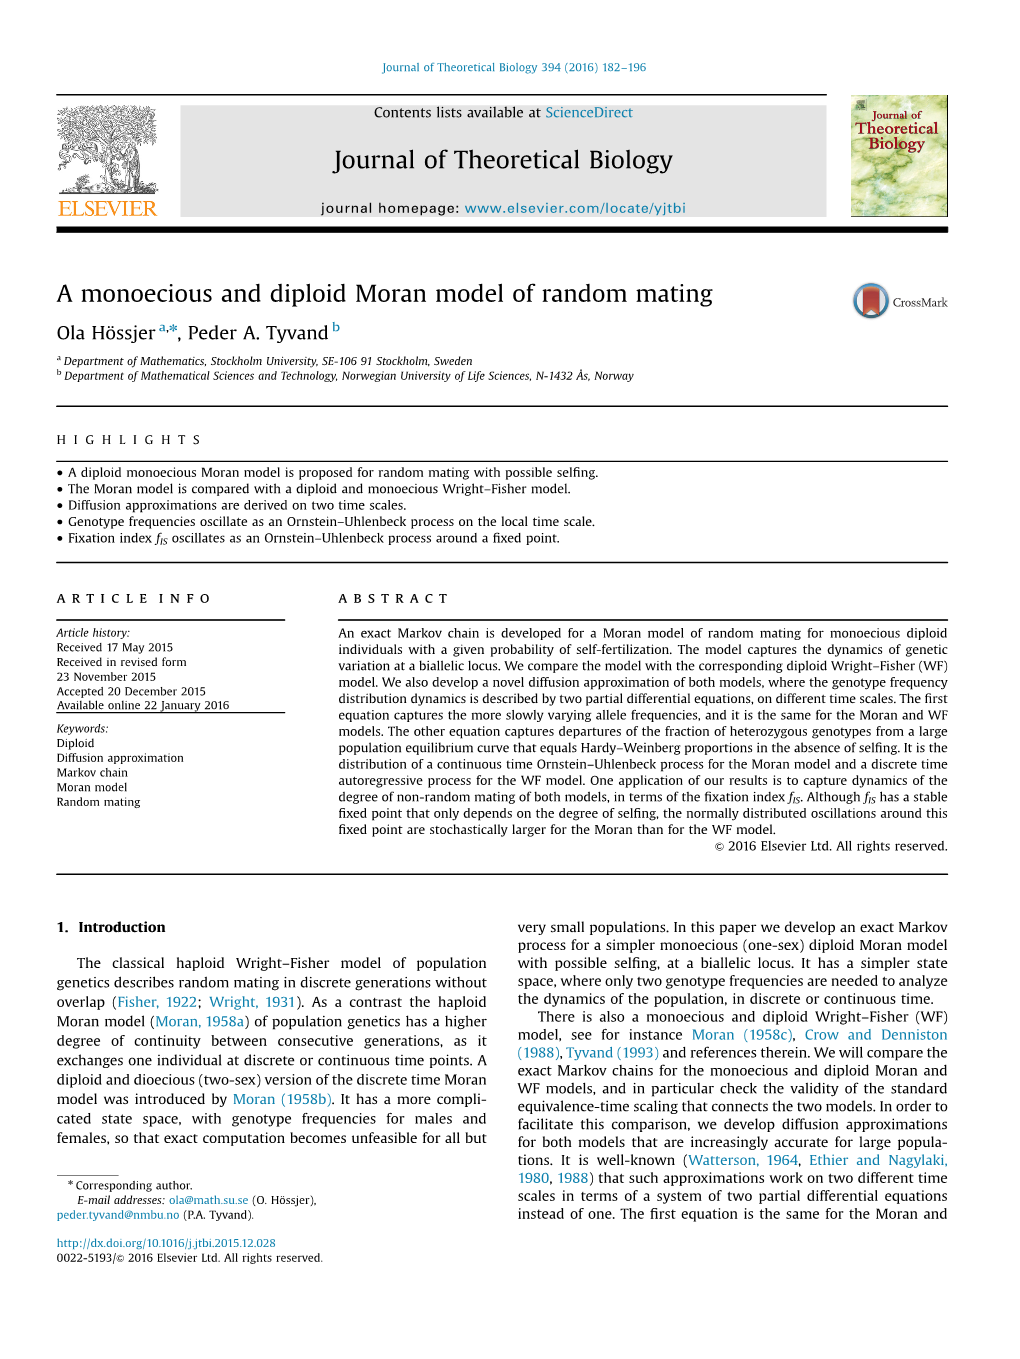 A Monoecious and Diploid Moran Model of Random Mating